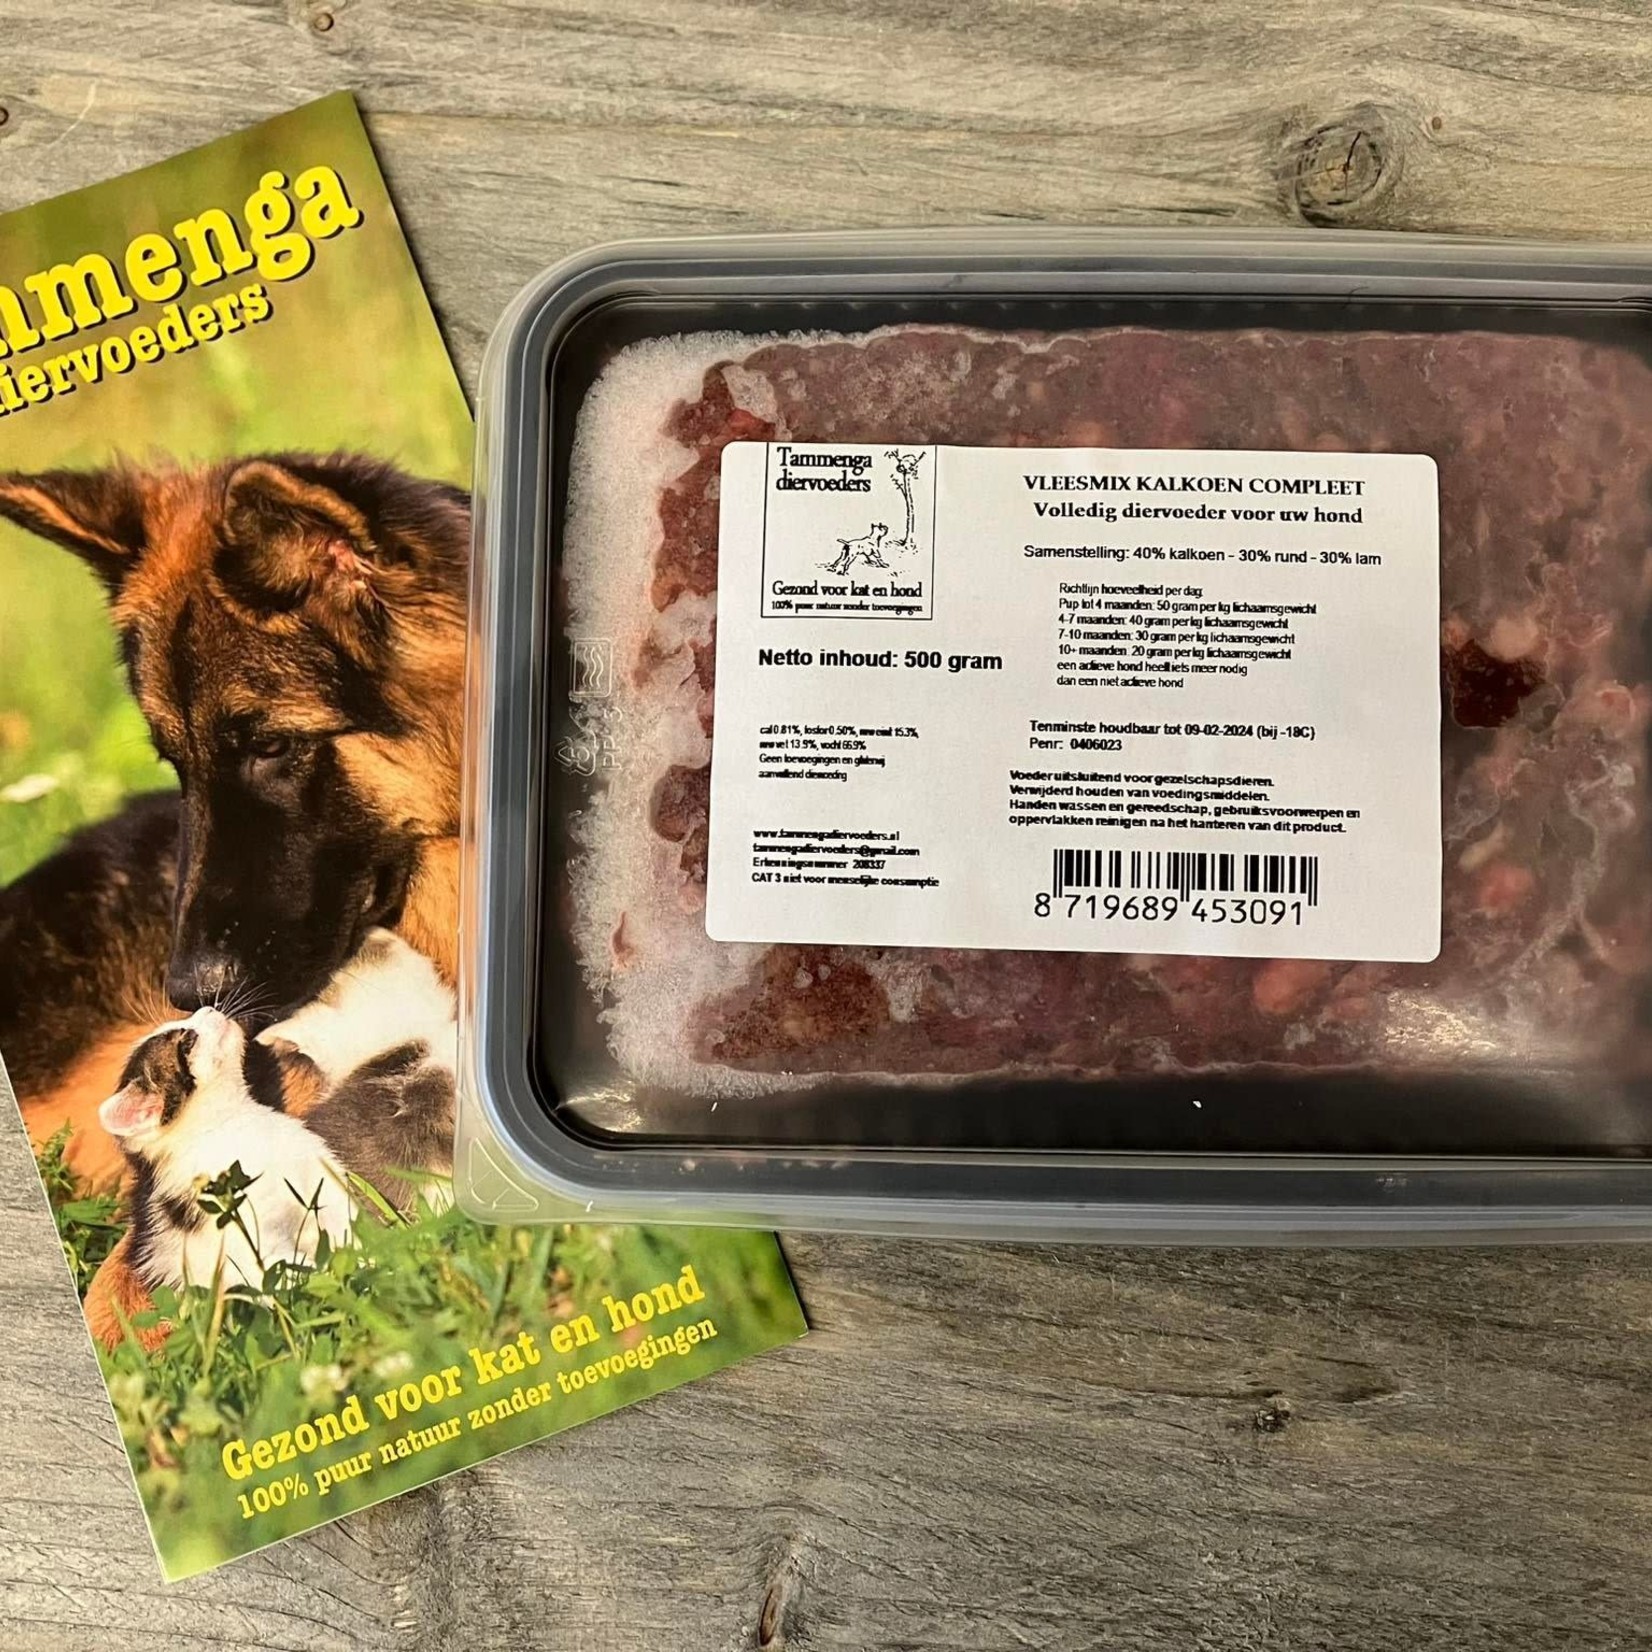 Tammenga Tammenga Vleesmix kalkoen compleet 500 gram